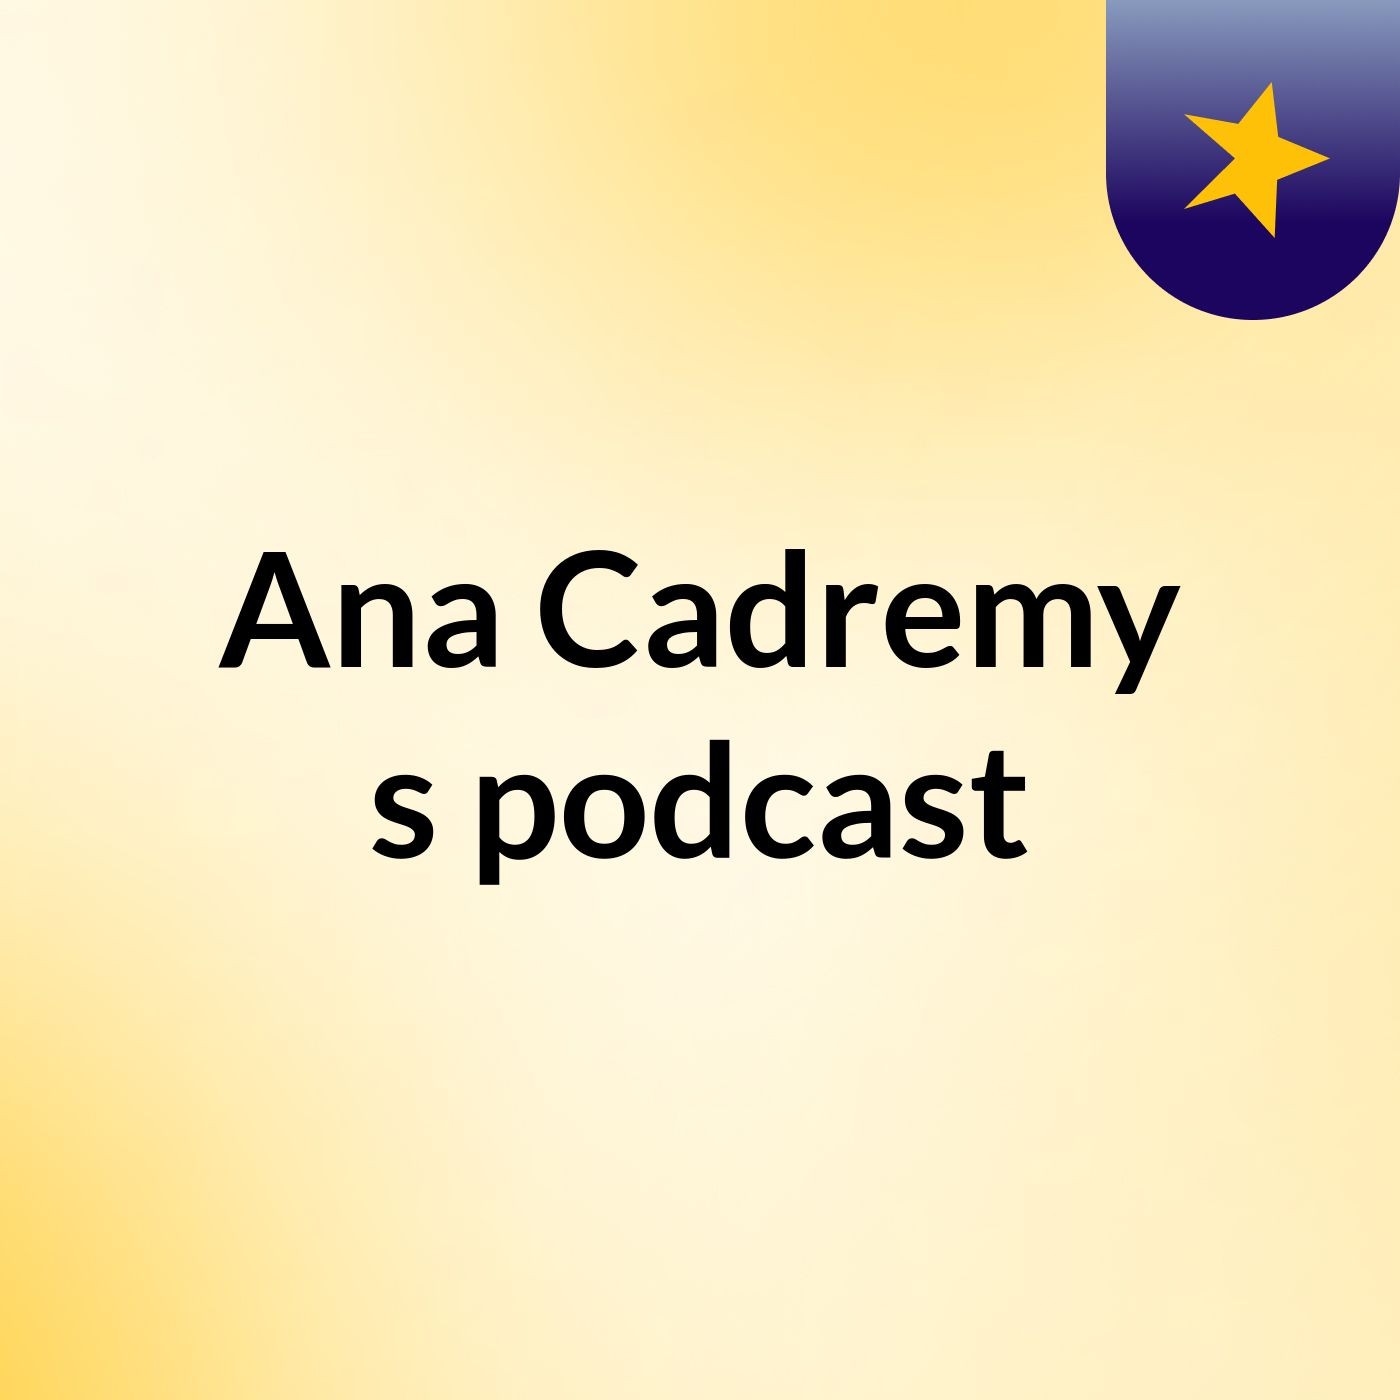 Ana Cadremy's podcast